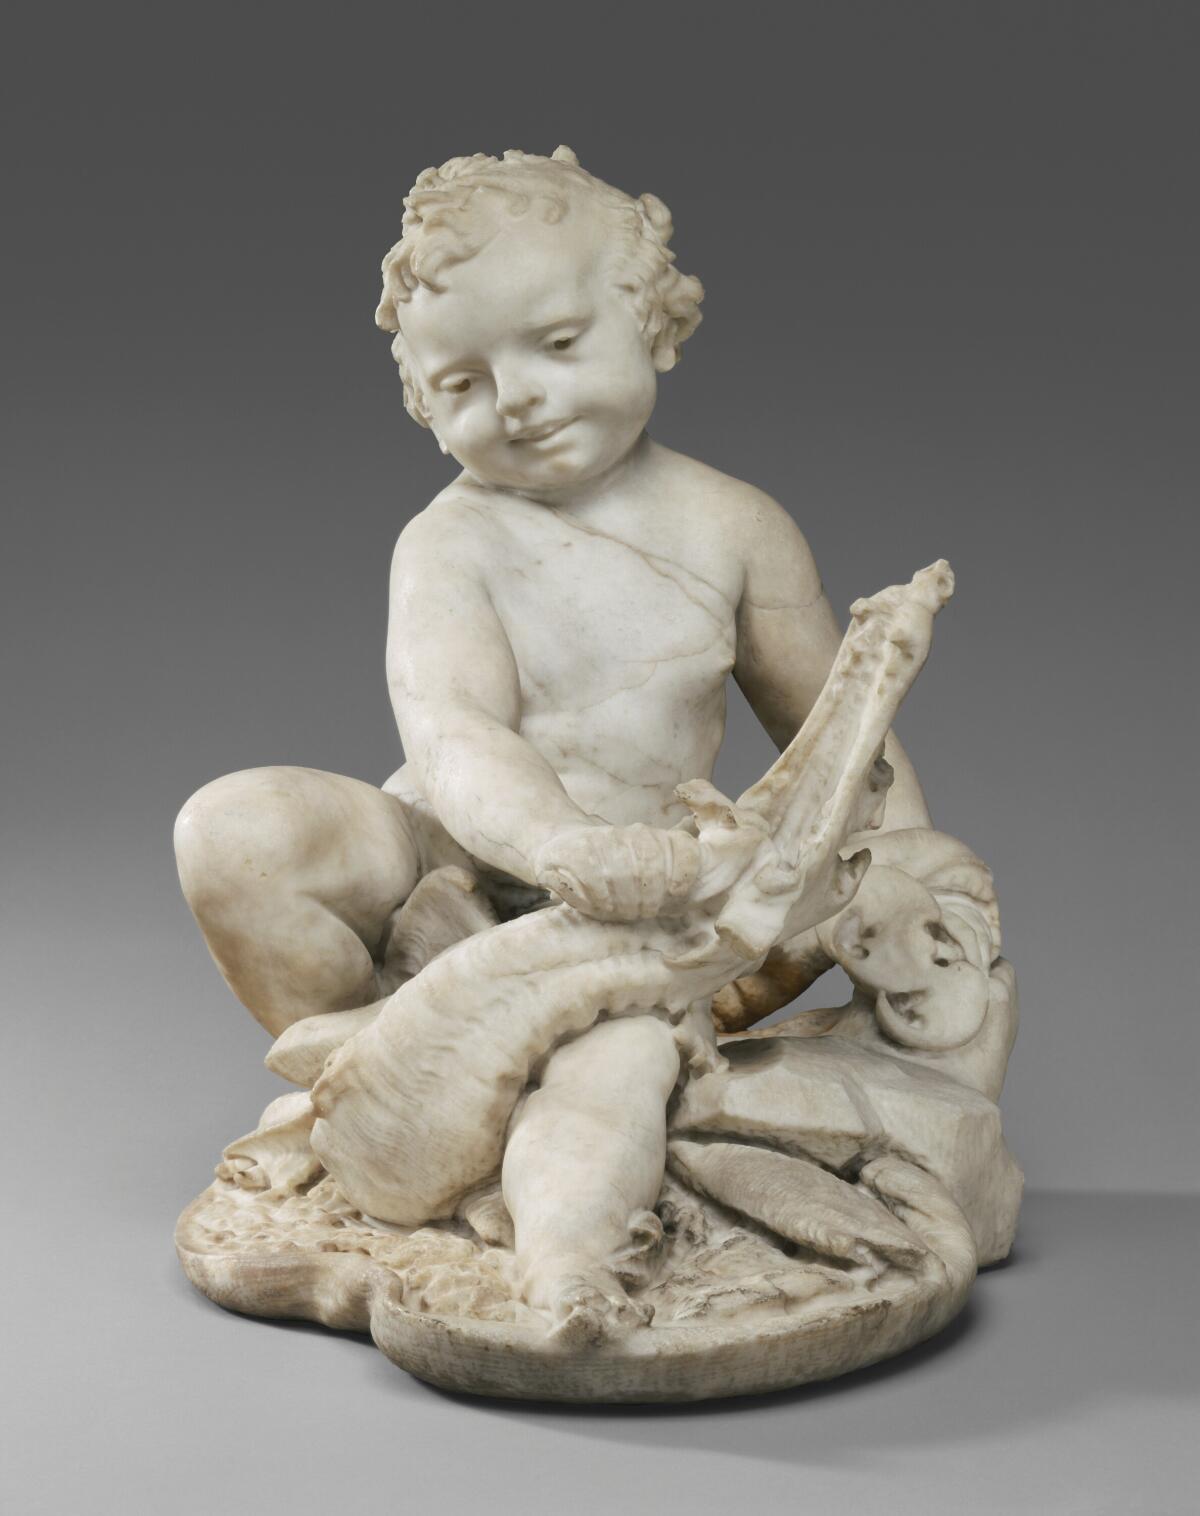 Pietro Bernini and Gian Lorenzo Bernini, “Boy with a Dragon,” around 1617, marble